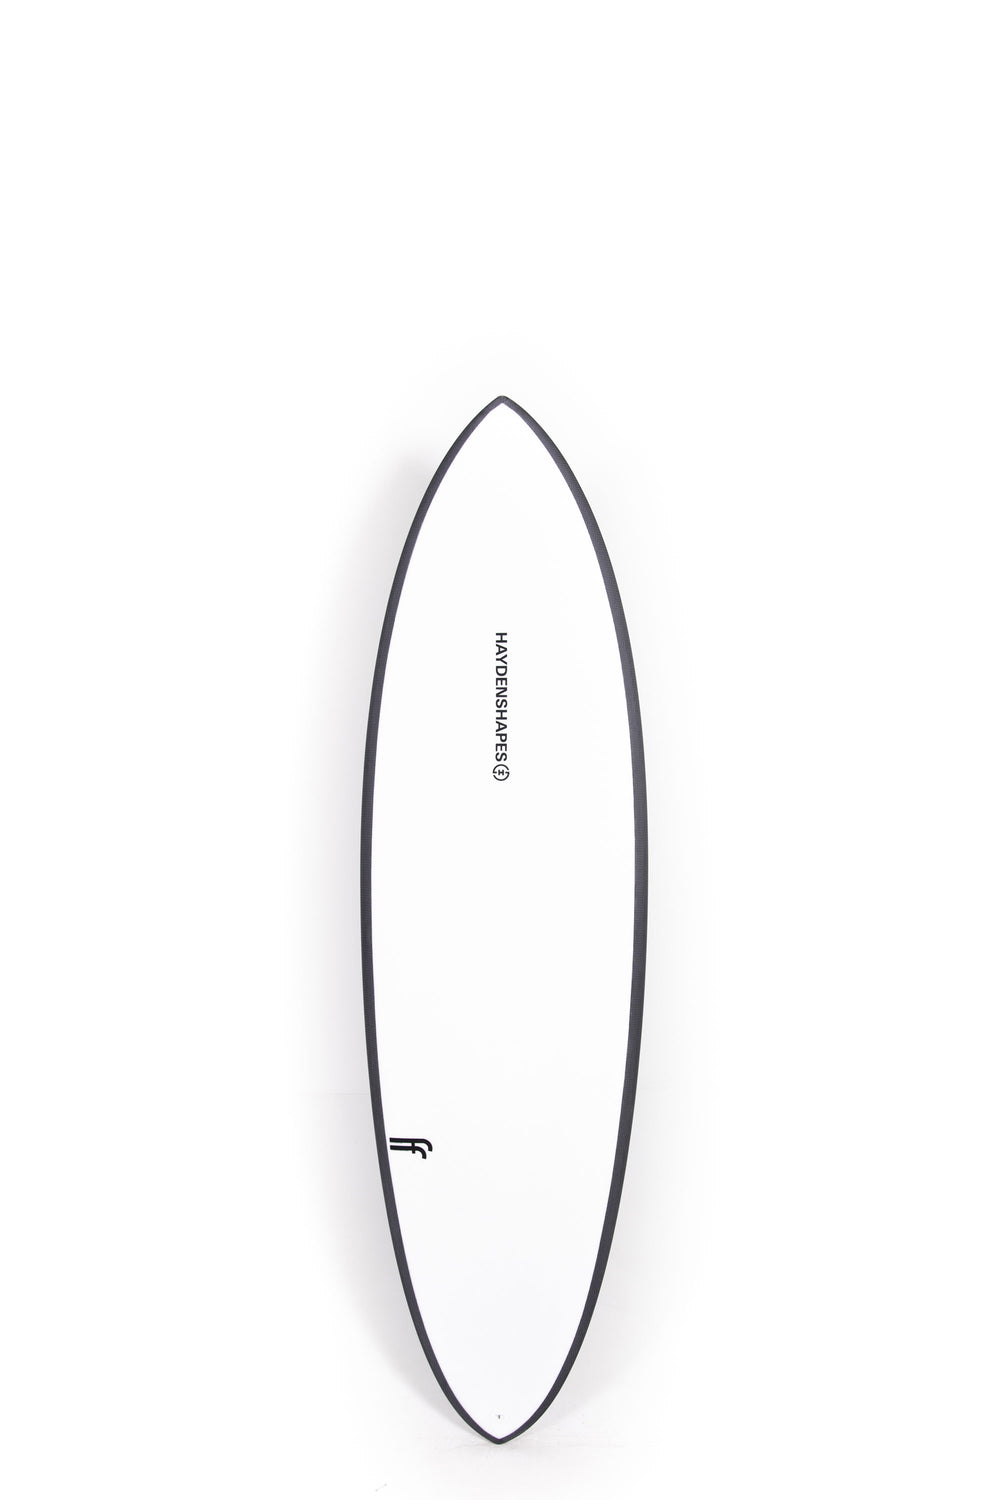 Pukas-Surf-Shop-HS-Surfboards-Hypto-Krypto-6_10_-01-Clear